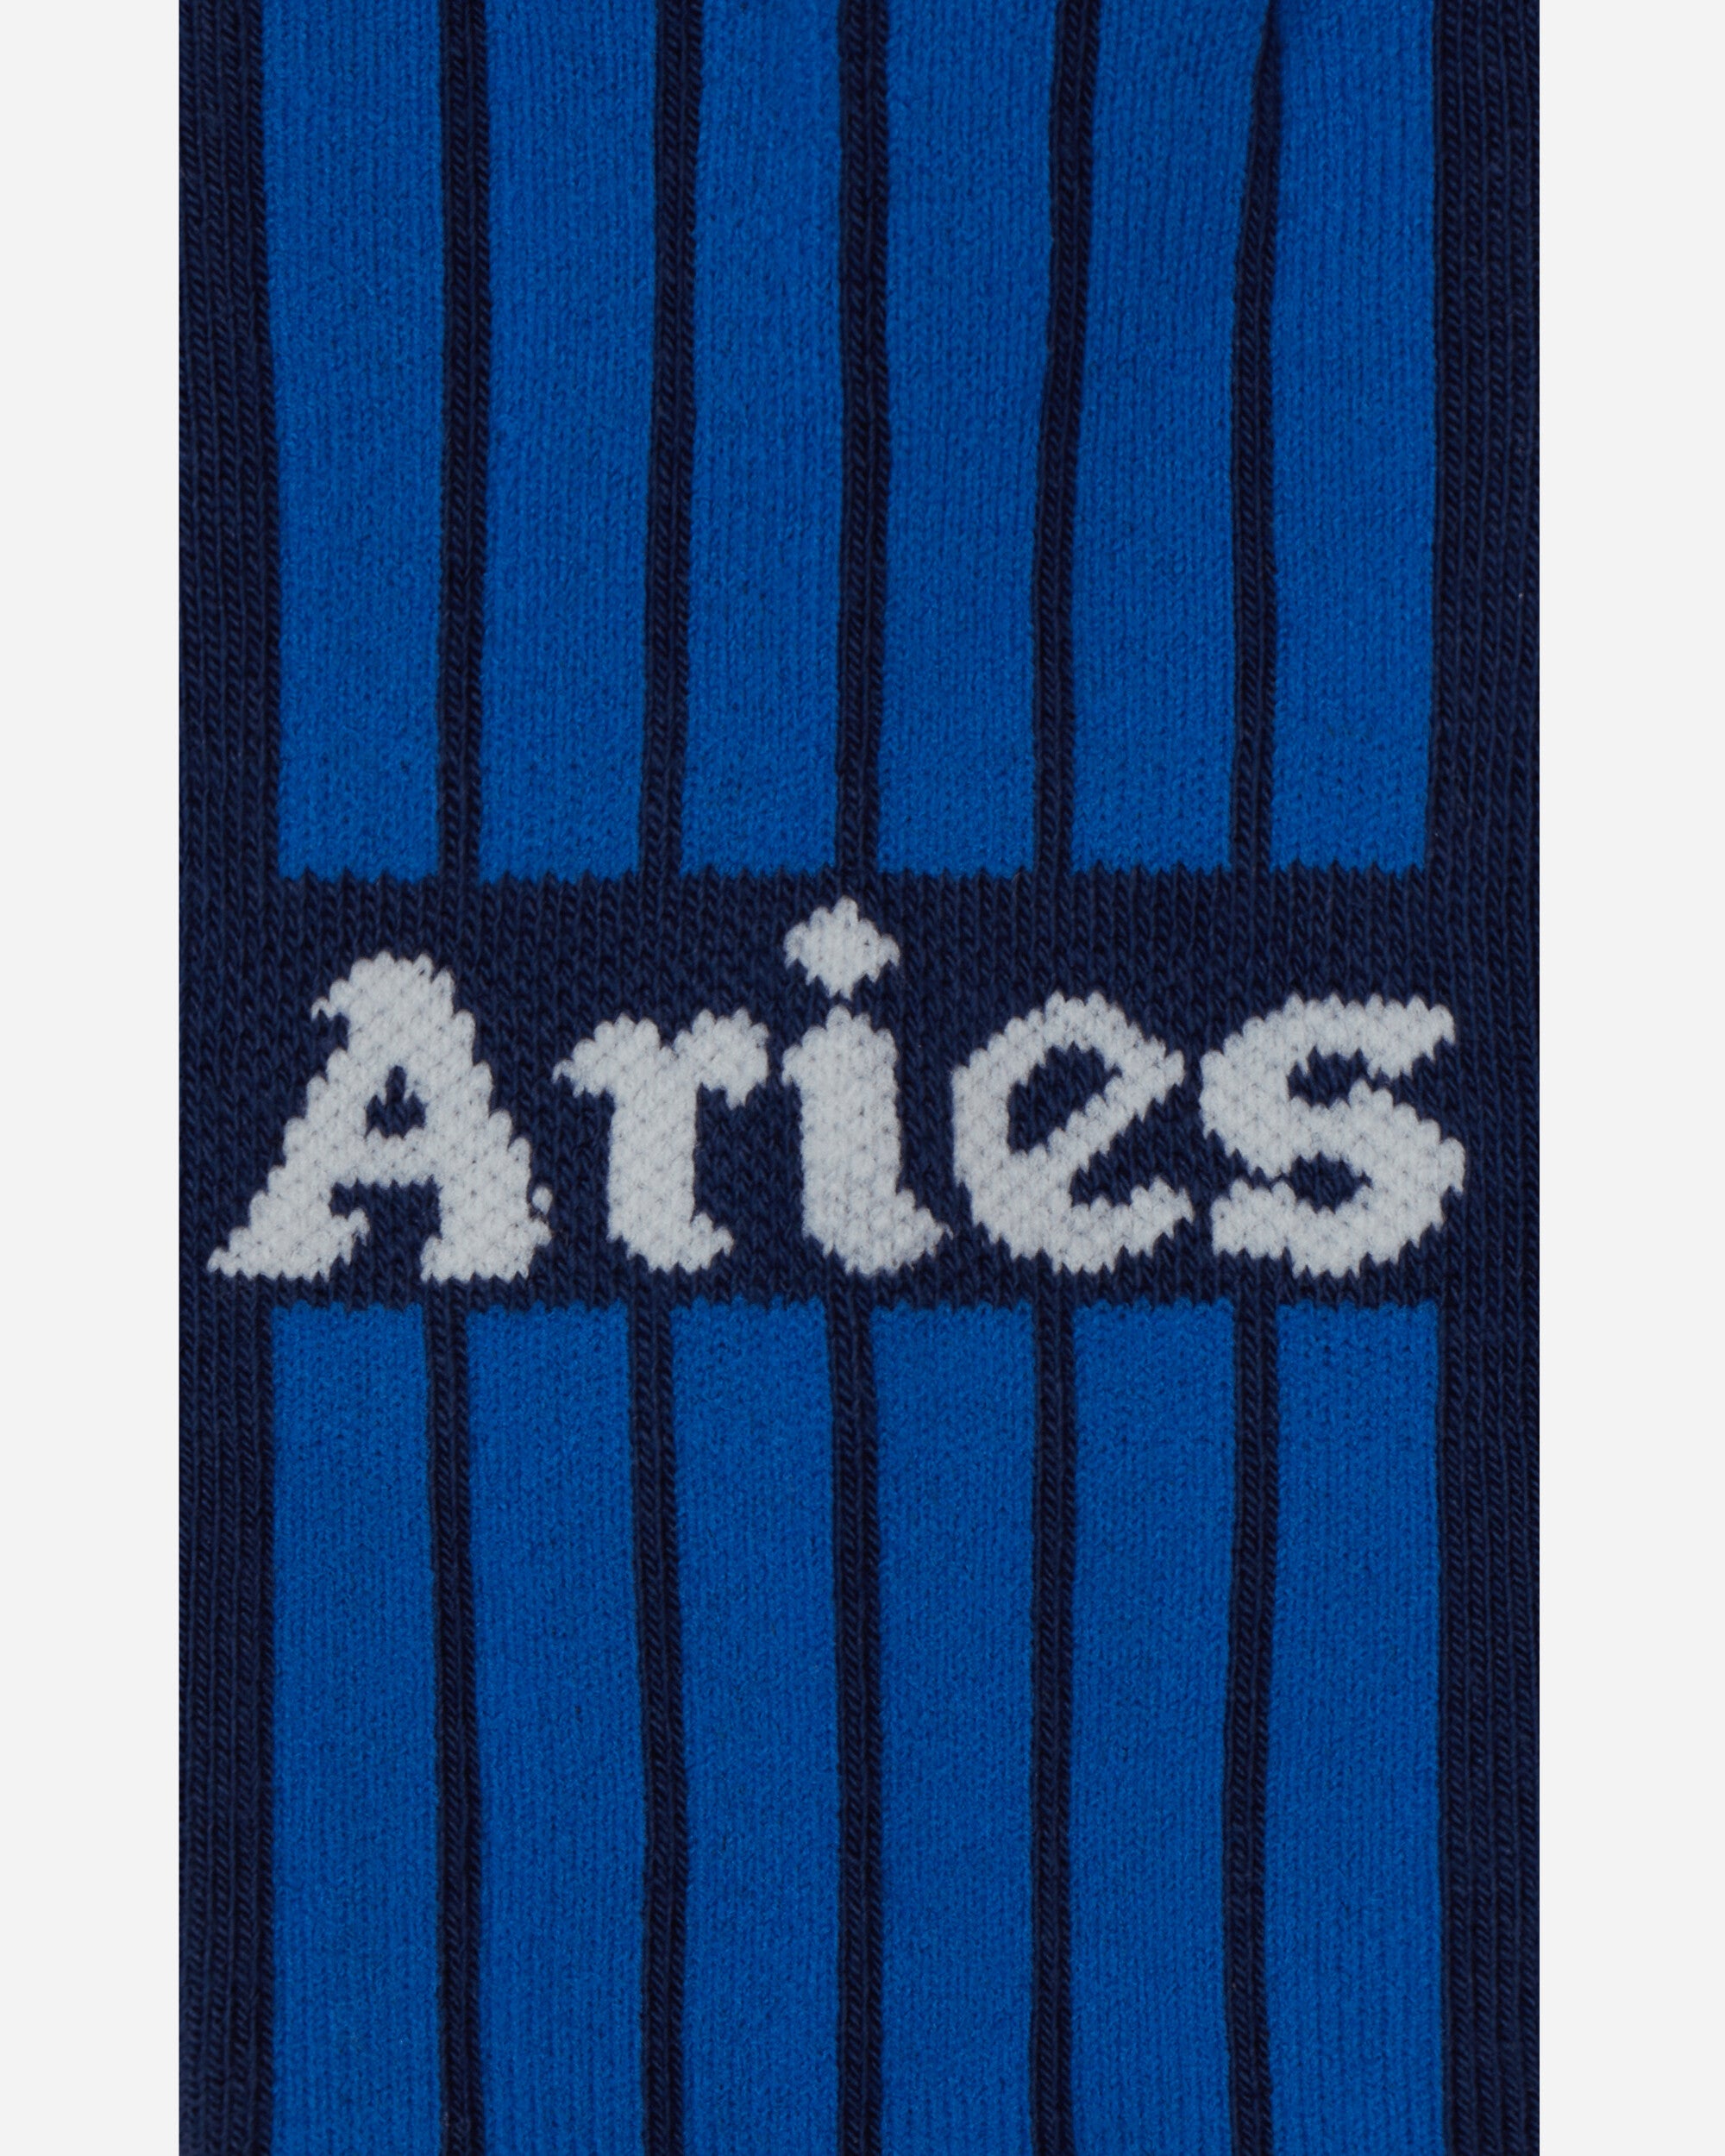 Aries Eye Sock Blue  Underwear Socks UM0004003 BLU